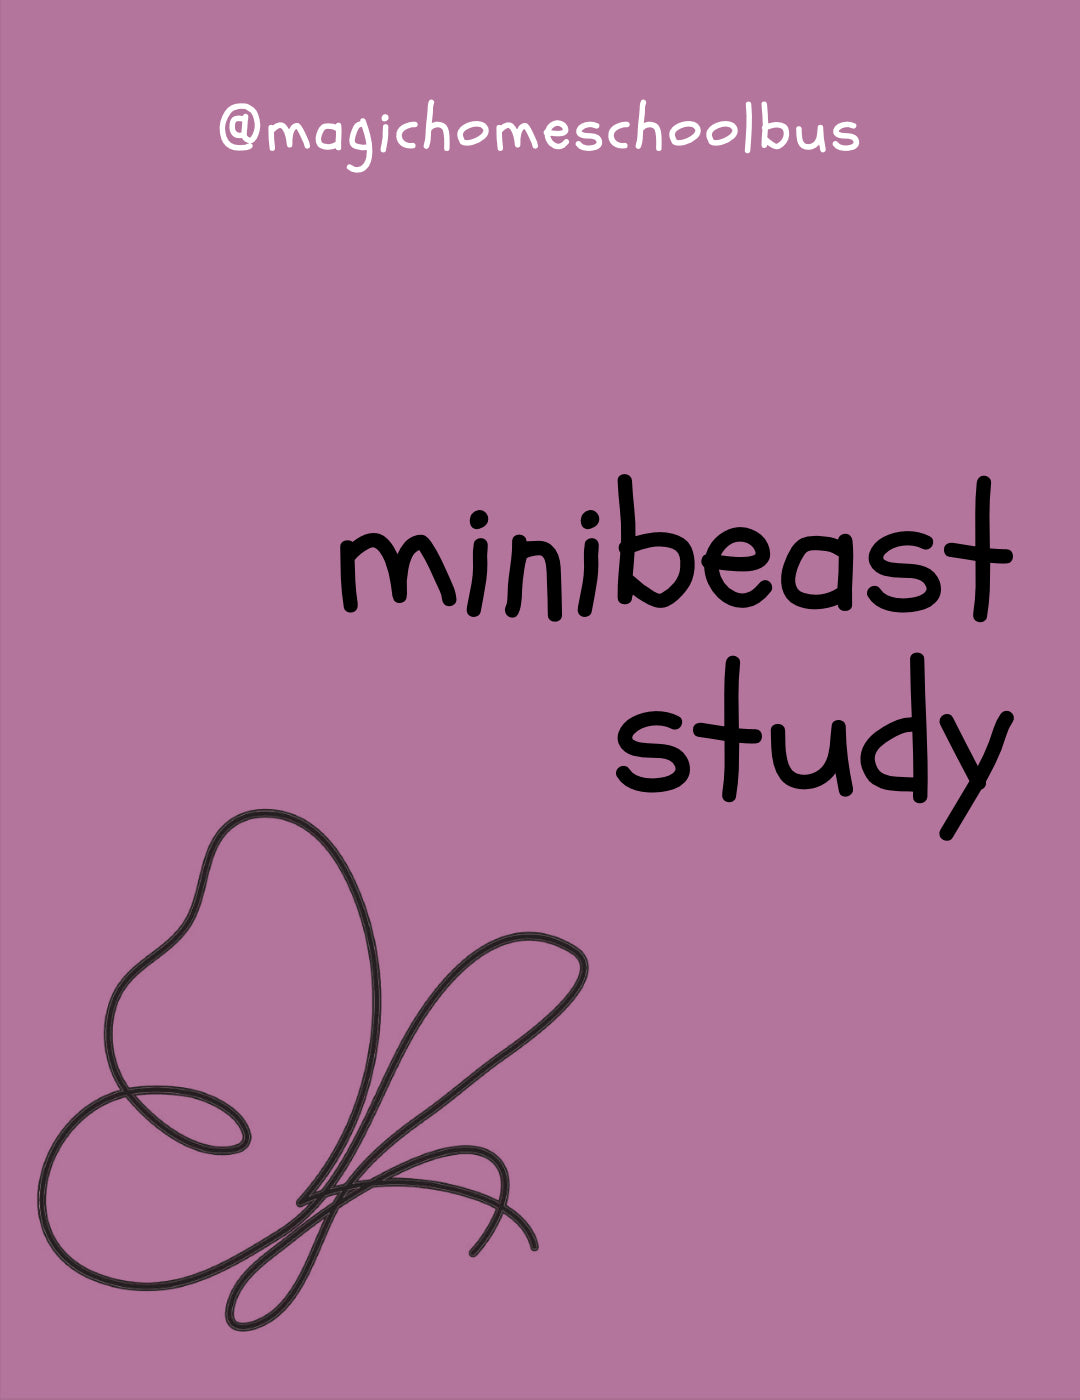 Magic Homeschool Bus - Minibeast Study